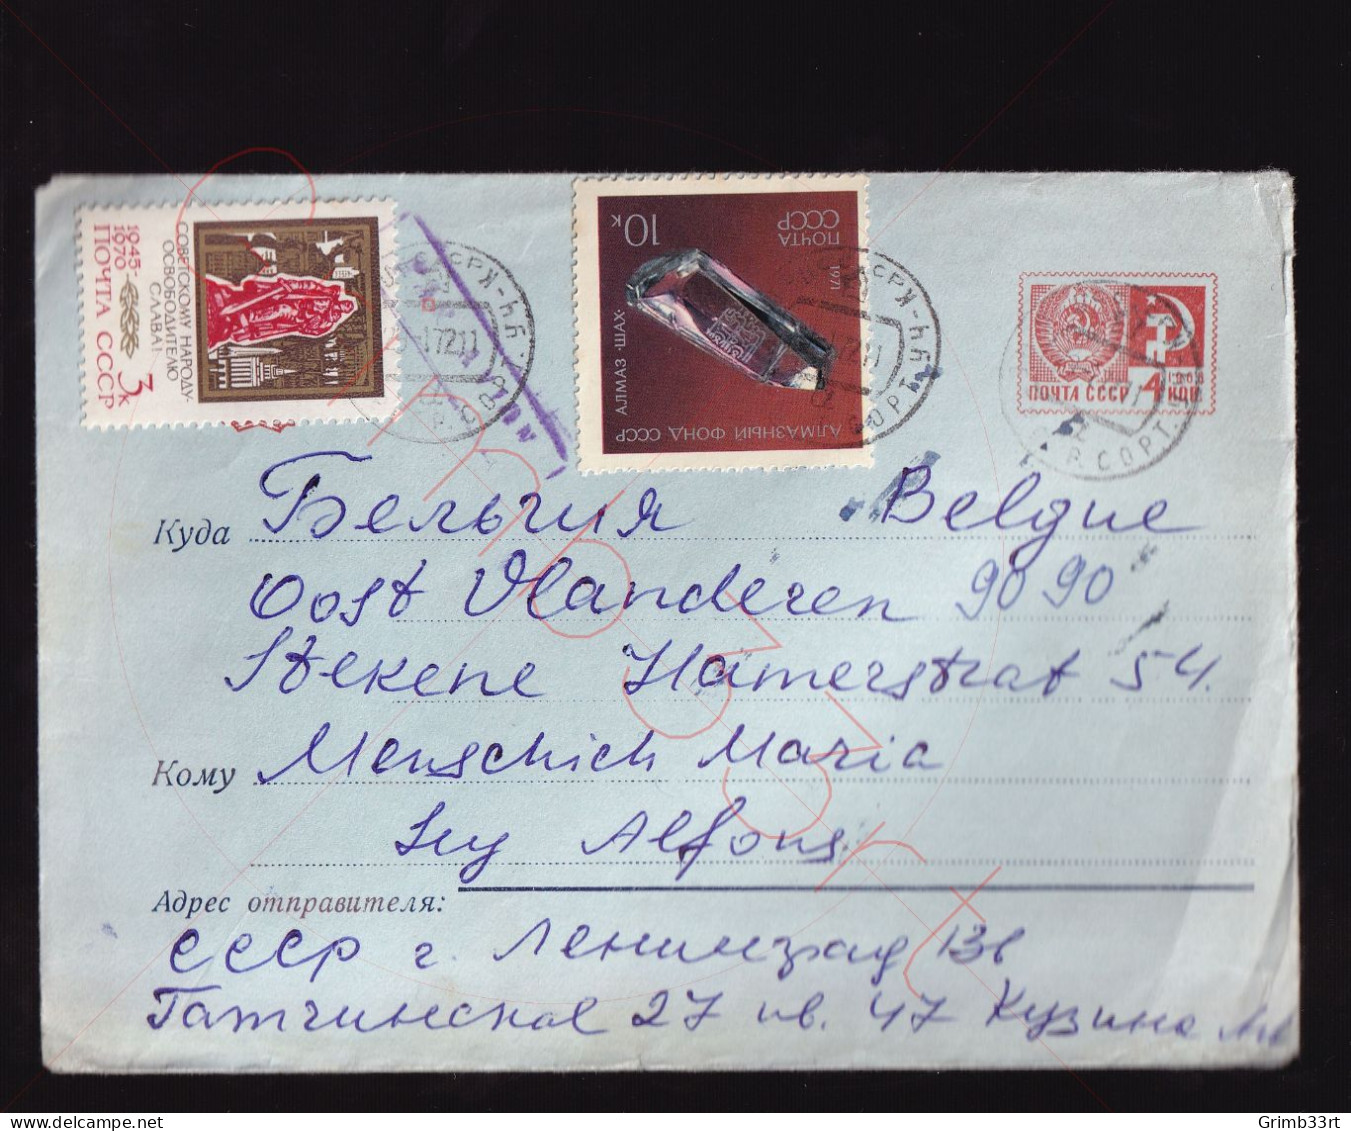 CCCP - Briefomslag Van Luchthaven Rusland Naar Stekene - PAR AVION - 23 Januari 1971 - Storia Postale